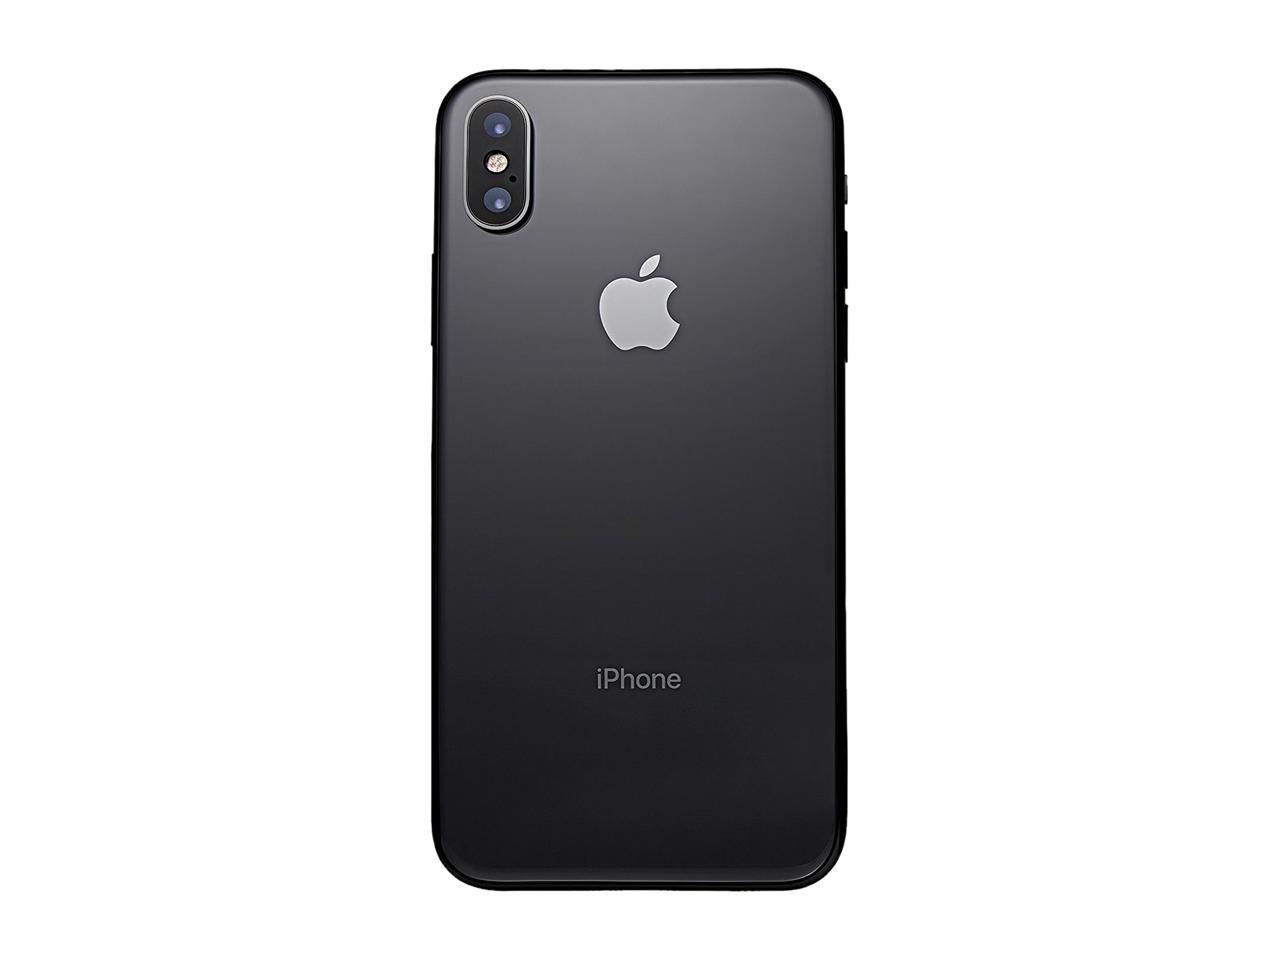 Apple Iphone X 4g Lte Unlocked Cell Phone 5 8 Space Gray 64gb 3gb Ram Newegg Com